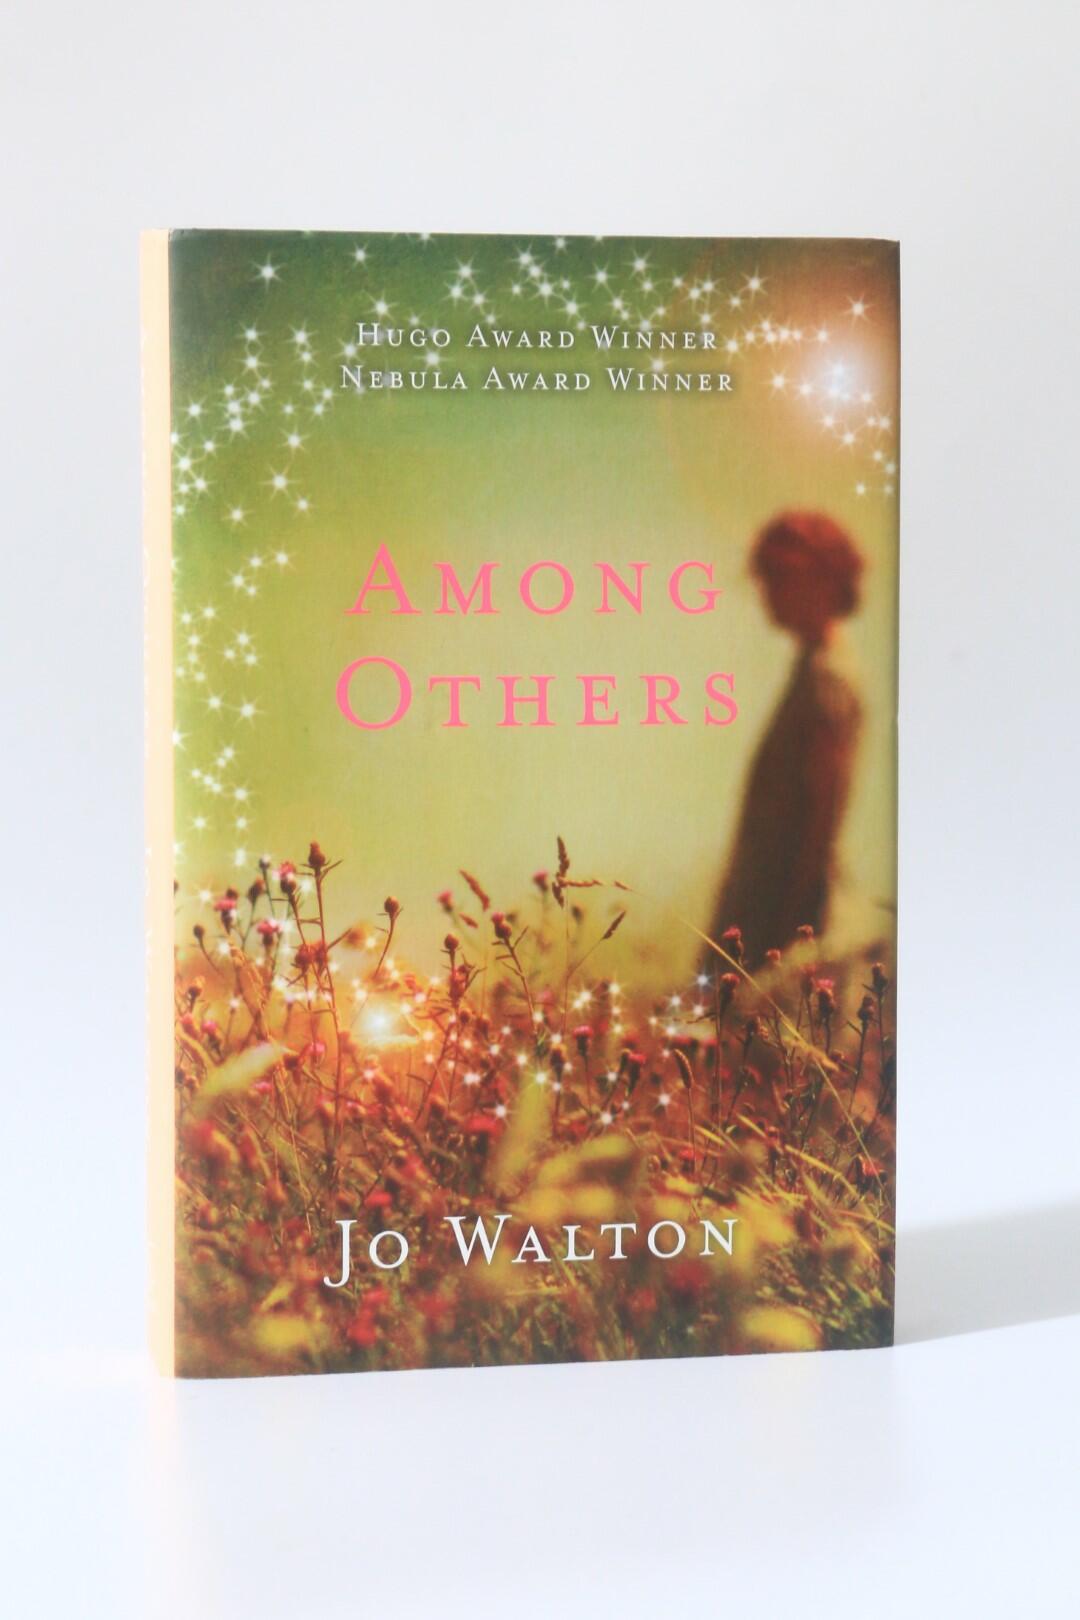 Jo Walton - Among Others - Corsair / Constable & Robinson, 2012, First Edition.